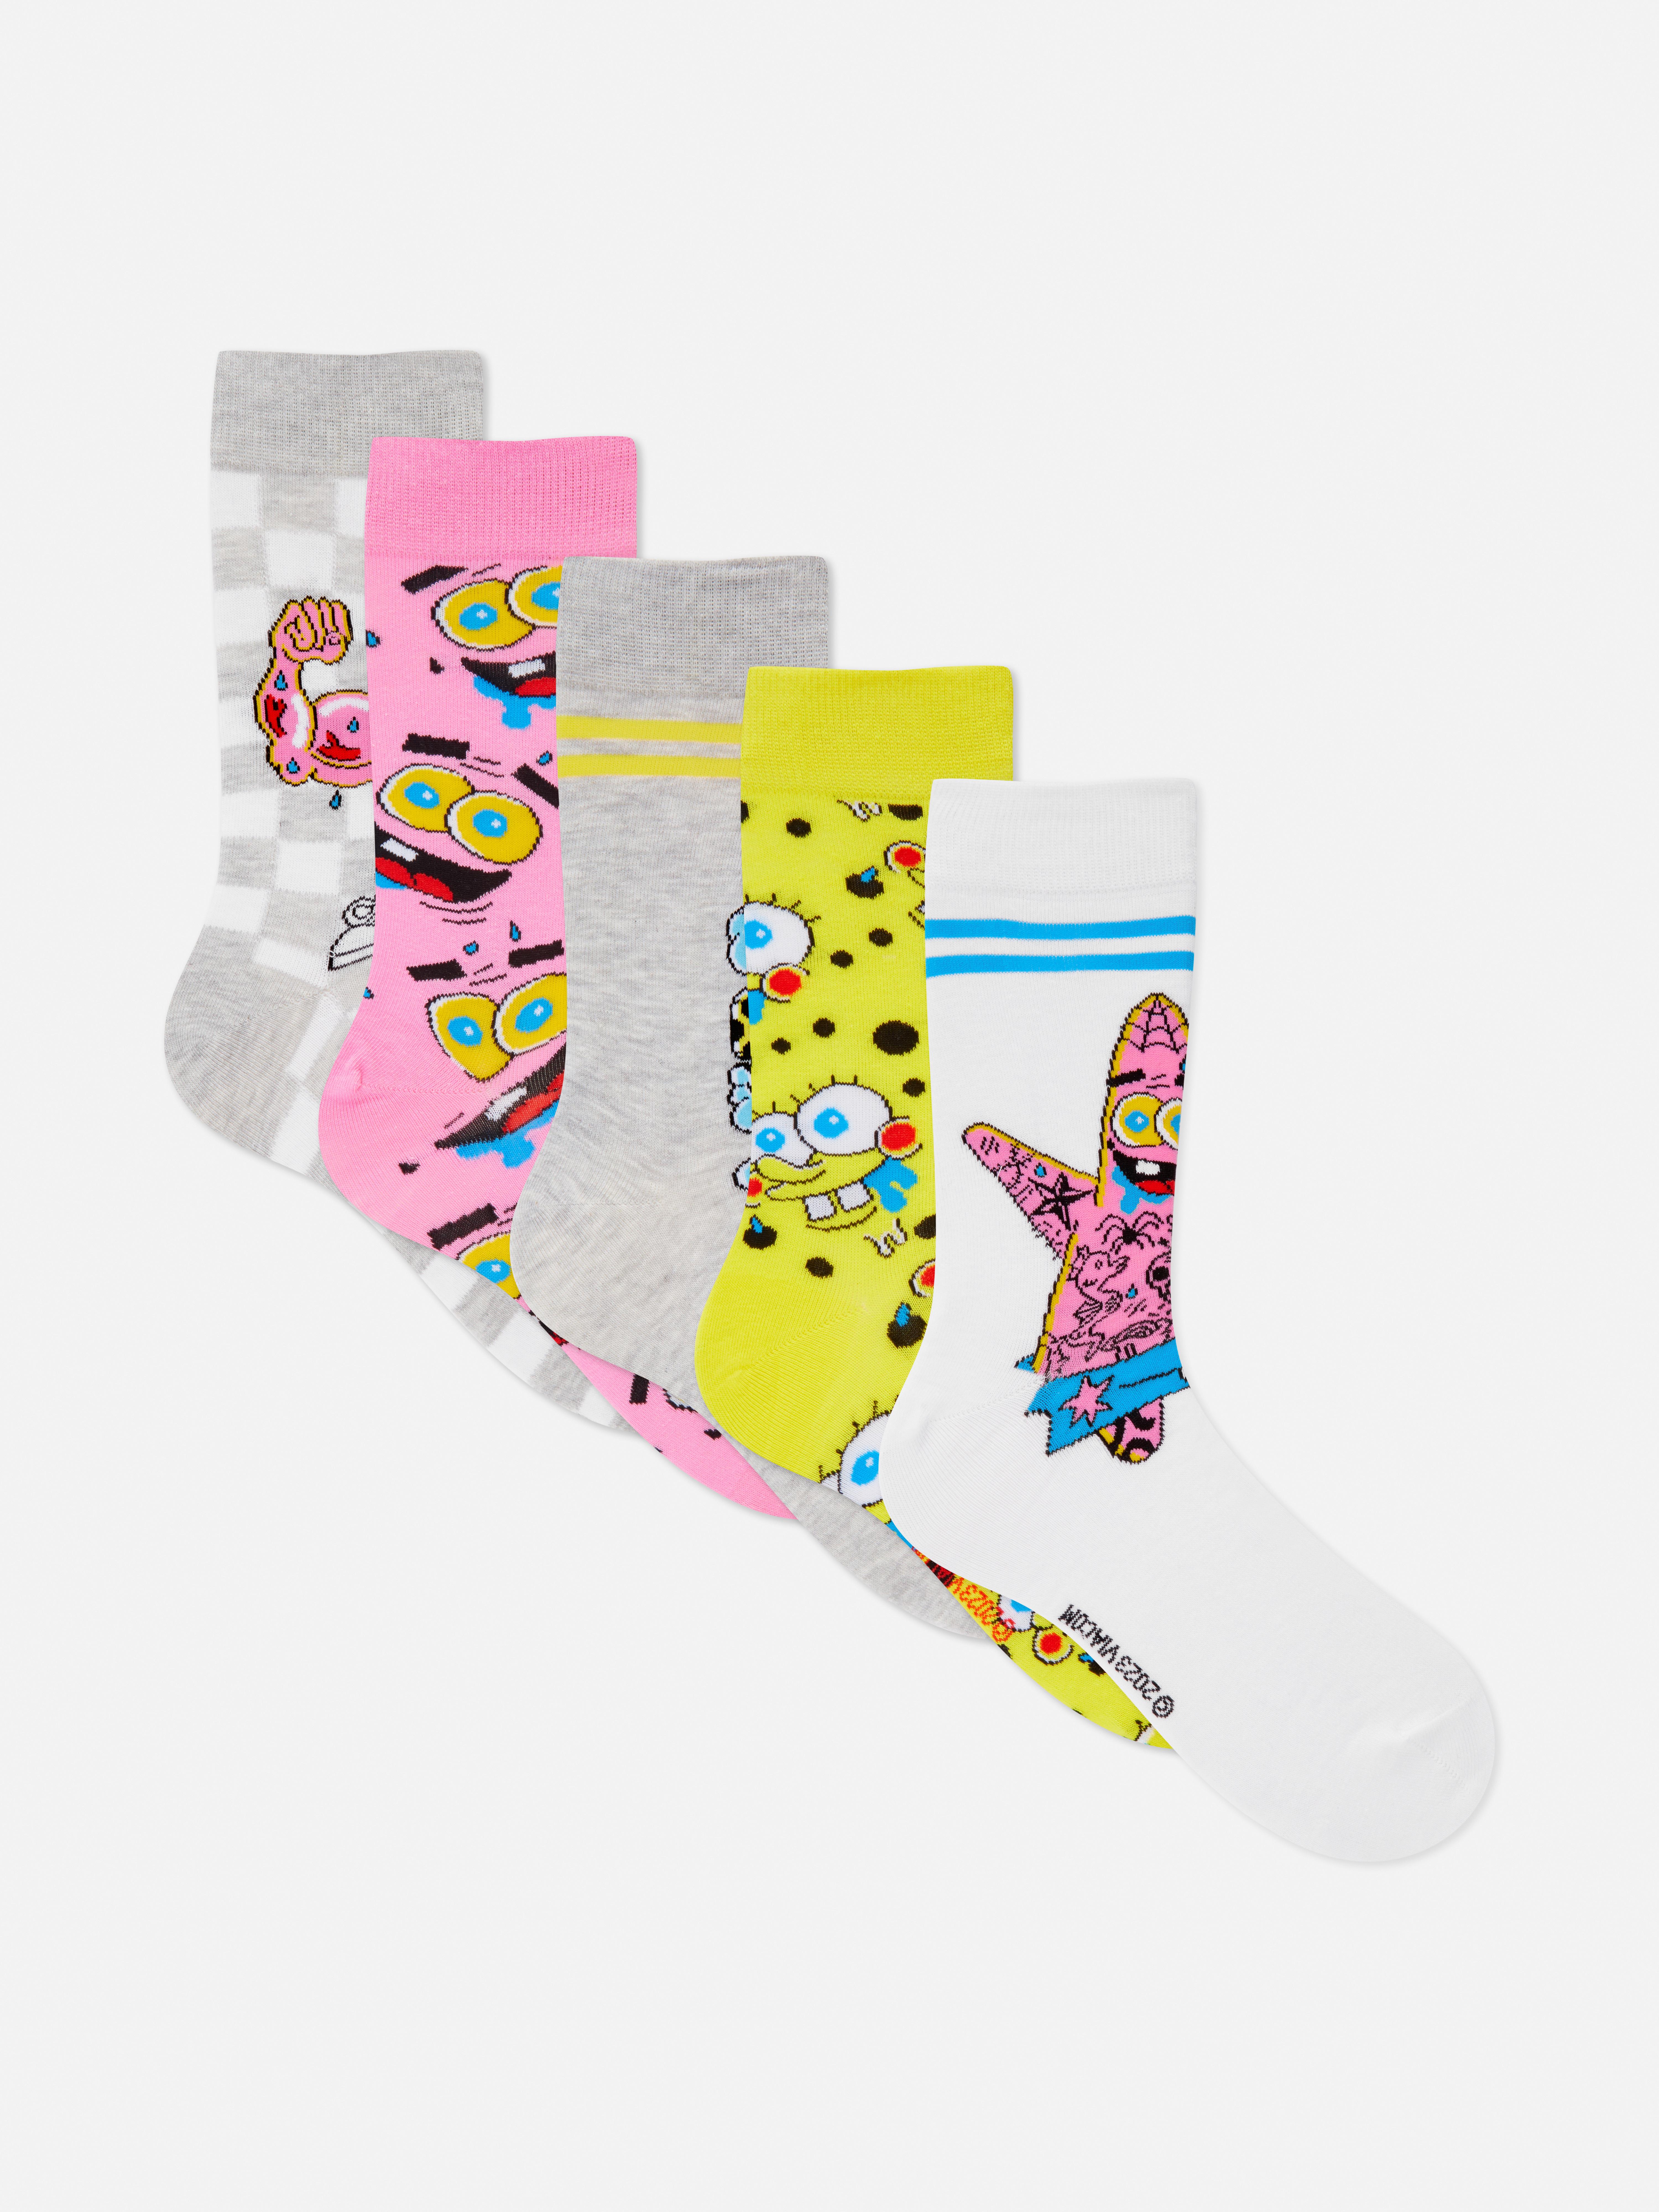 Middellange sokken SpongeBob SquarePants, 5 paar